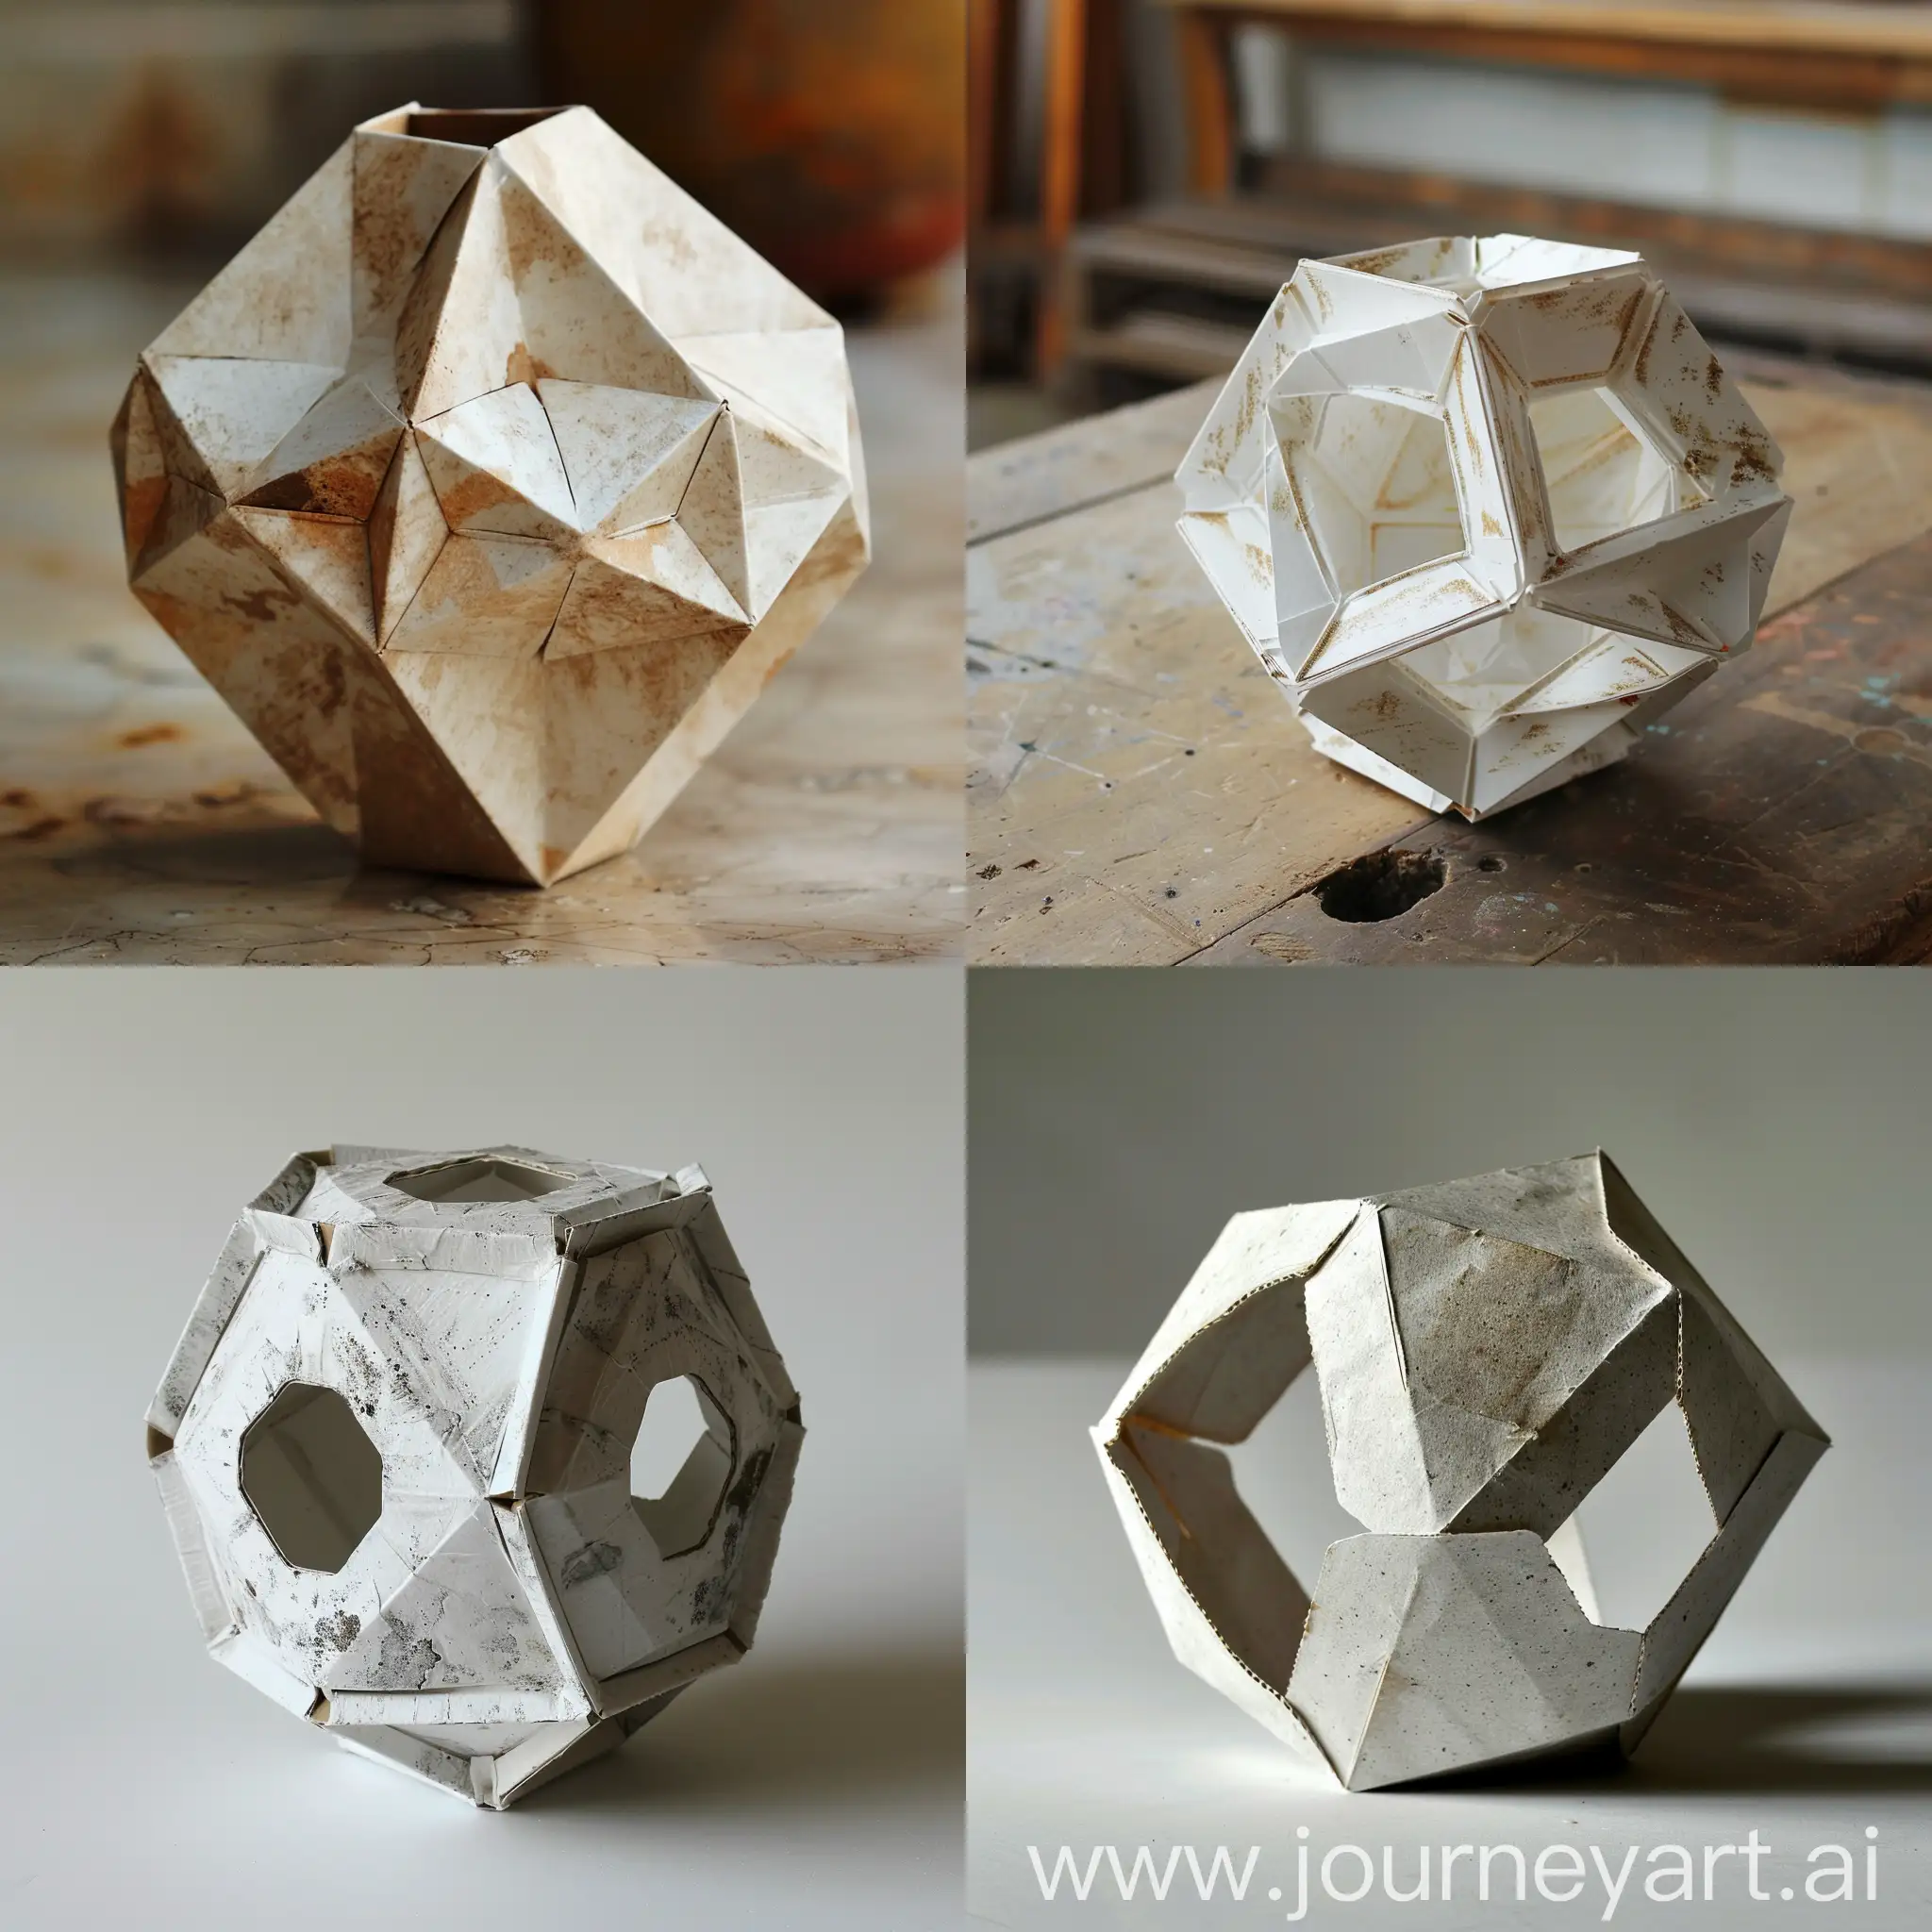 Geometric-Milk-Carton-Polyhedron-Creative-8Sided-Sculpture